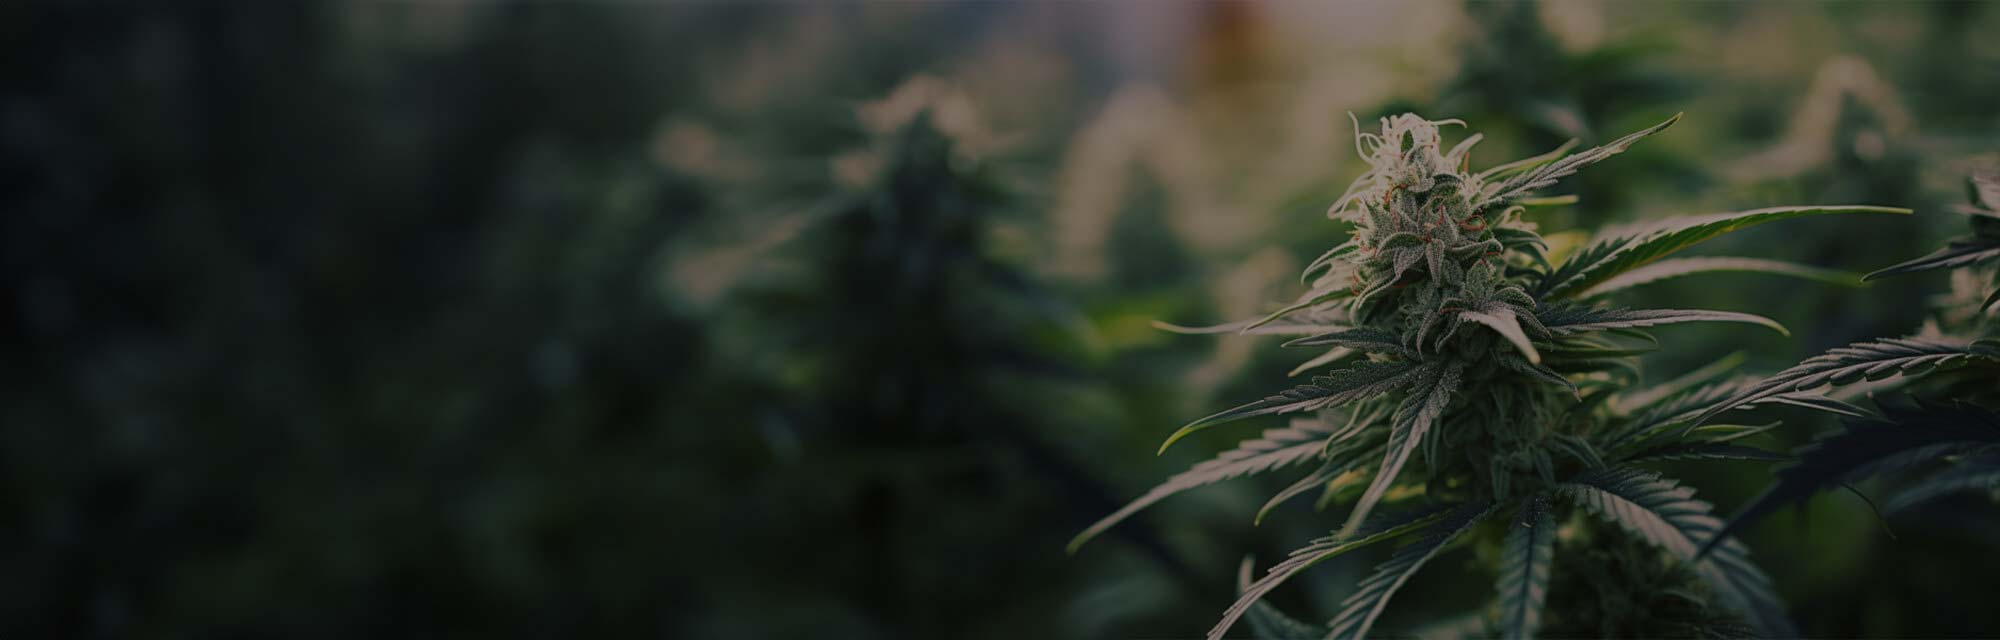 Buy Marijuana Seeds That Grow